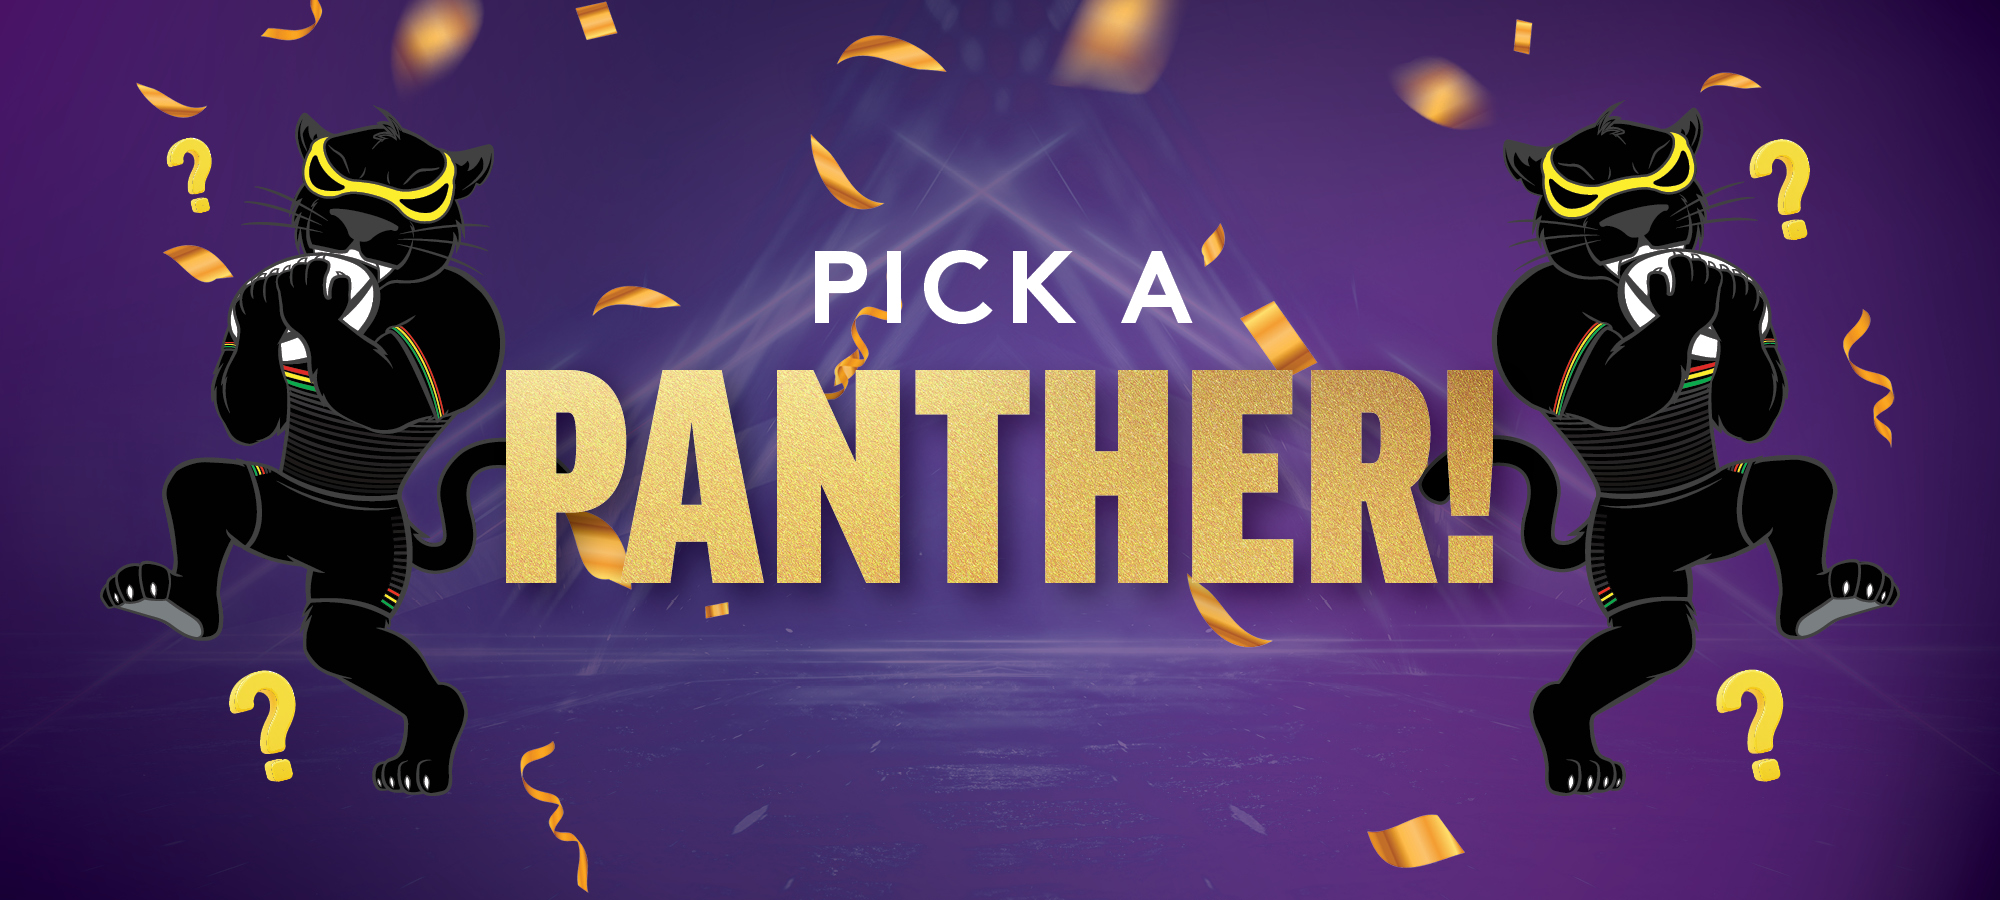 Pick a Panther